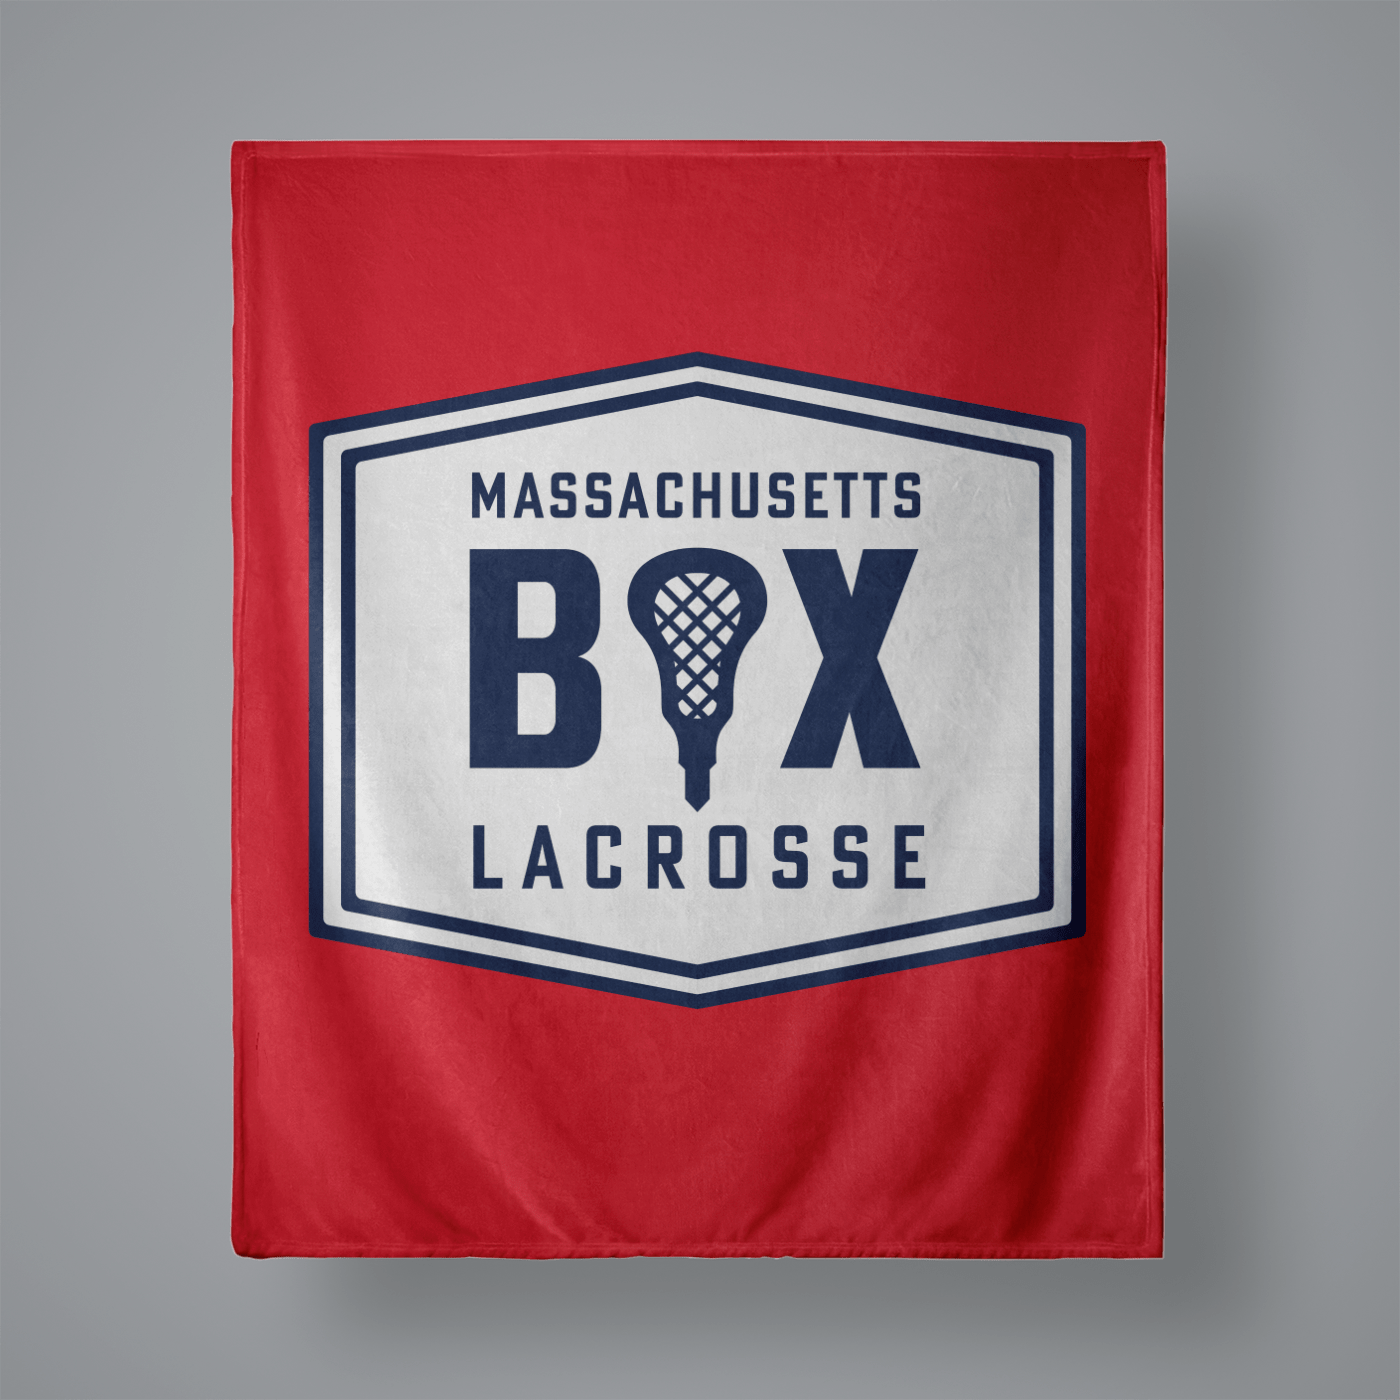 Mass Box Lacrosse Small Plush Throw Blanket Signature Lacrosse